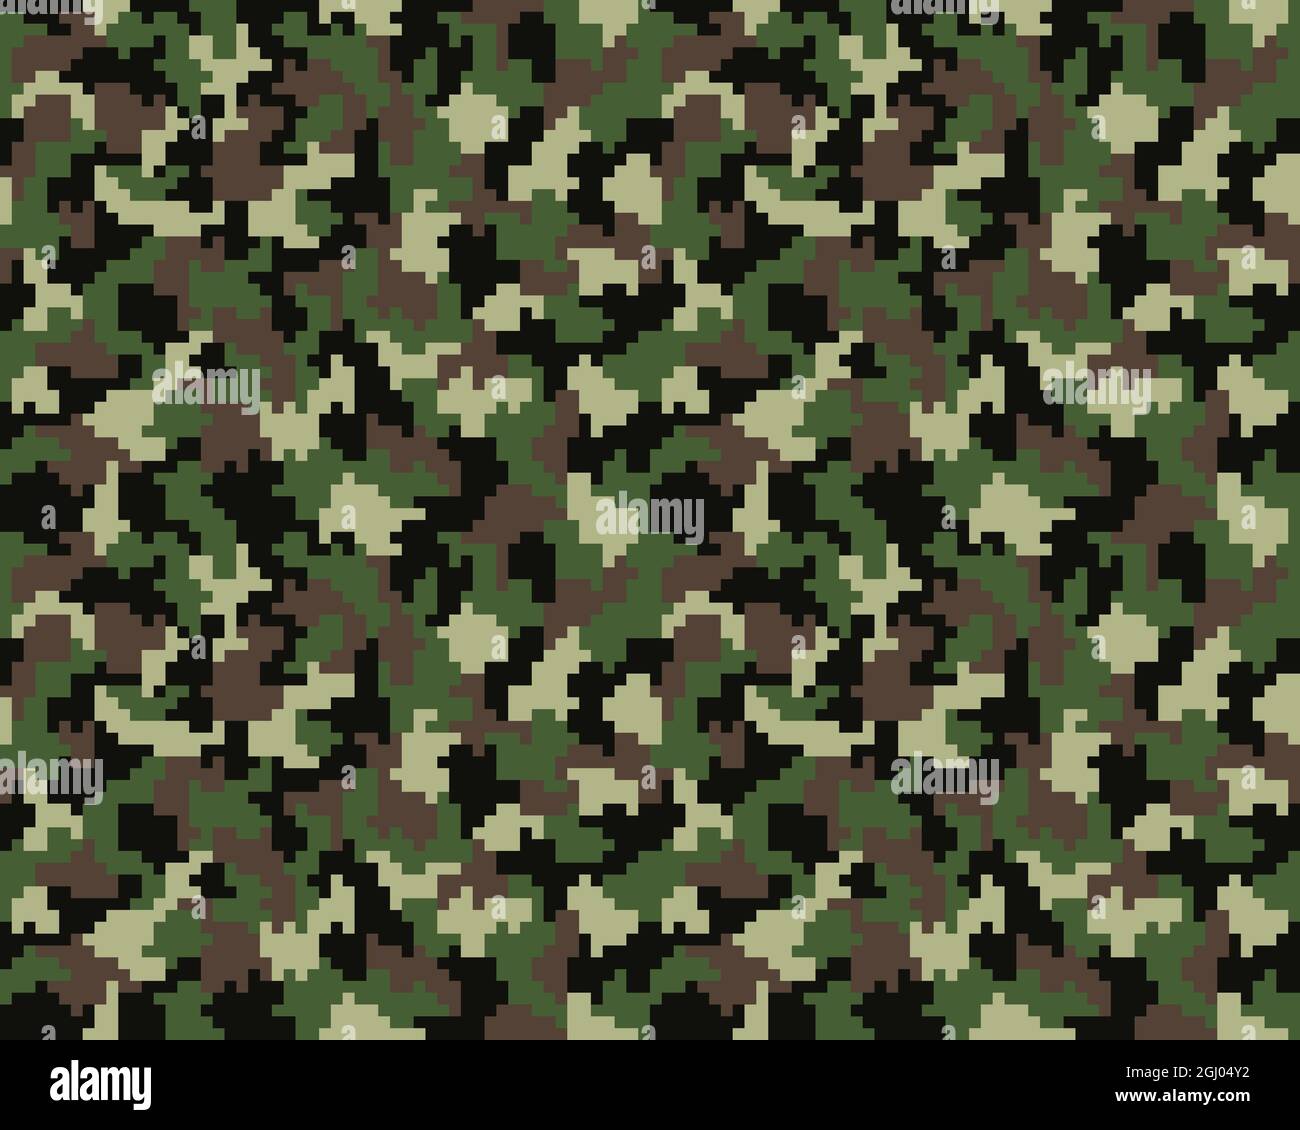 https://c8.alamy.com/comp/2GJ04Y2/pattern-of-digital-green-camouflage-seamless-background-2GJ04Y2.jpg